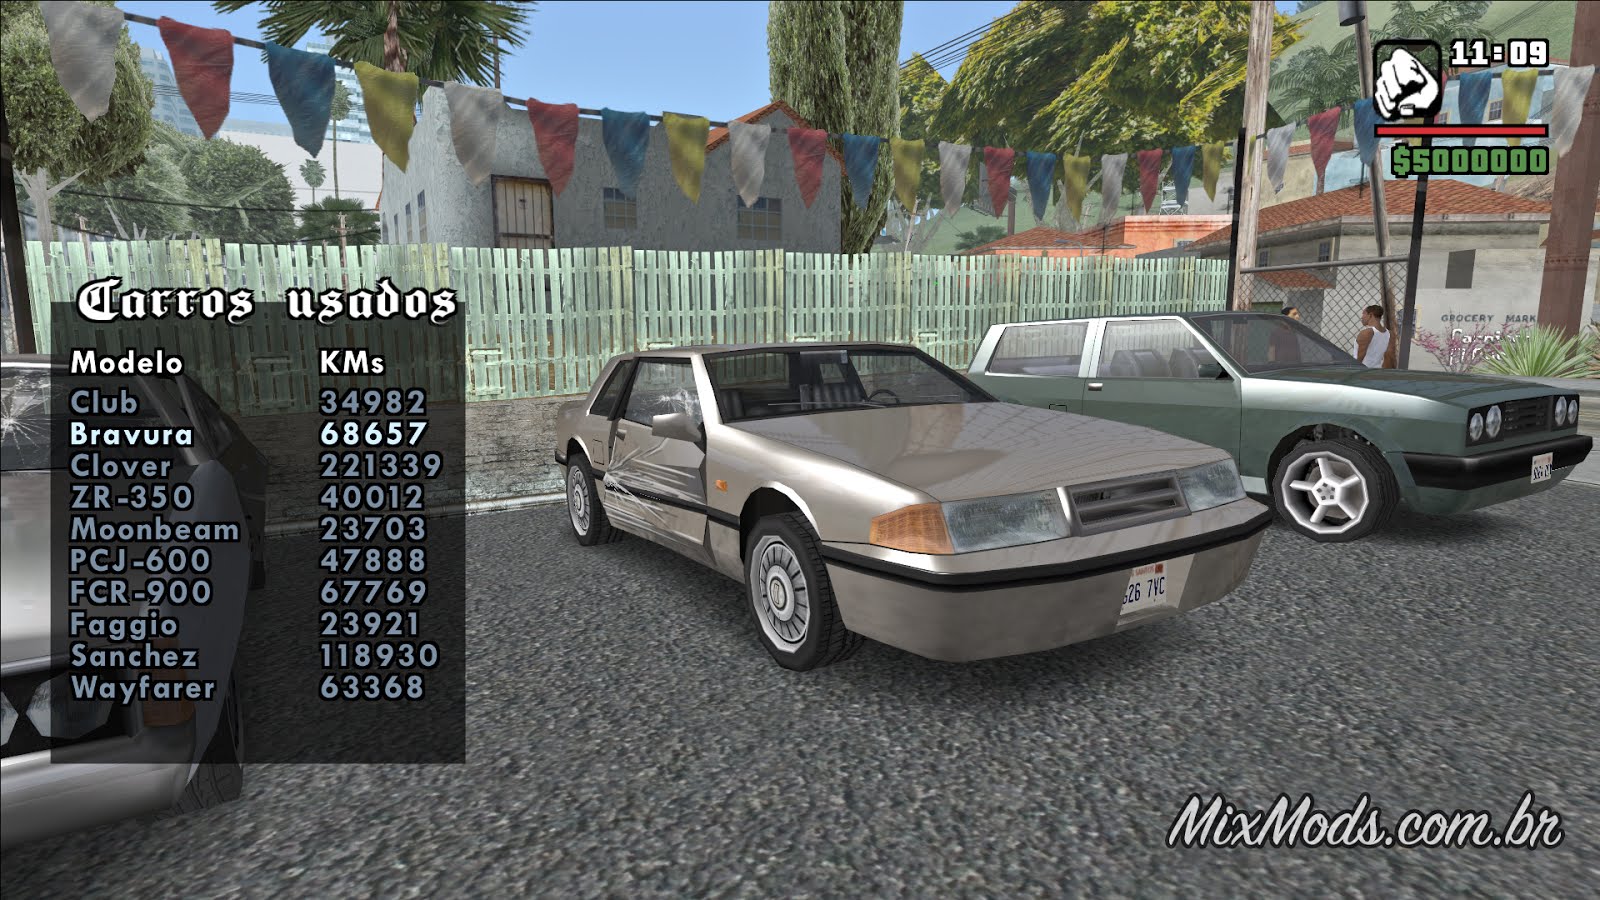 Códigos de GTA San Andreas para aparecer carros – PS2 - Dicas GTA